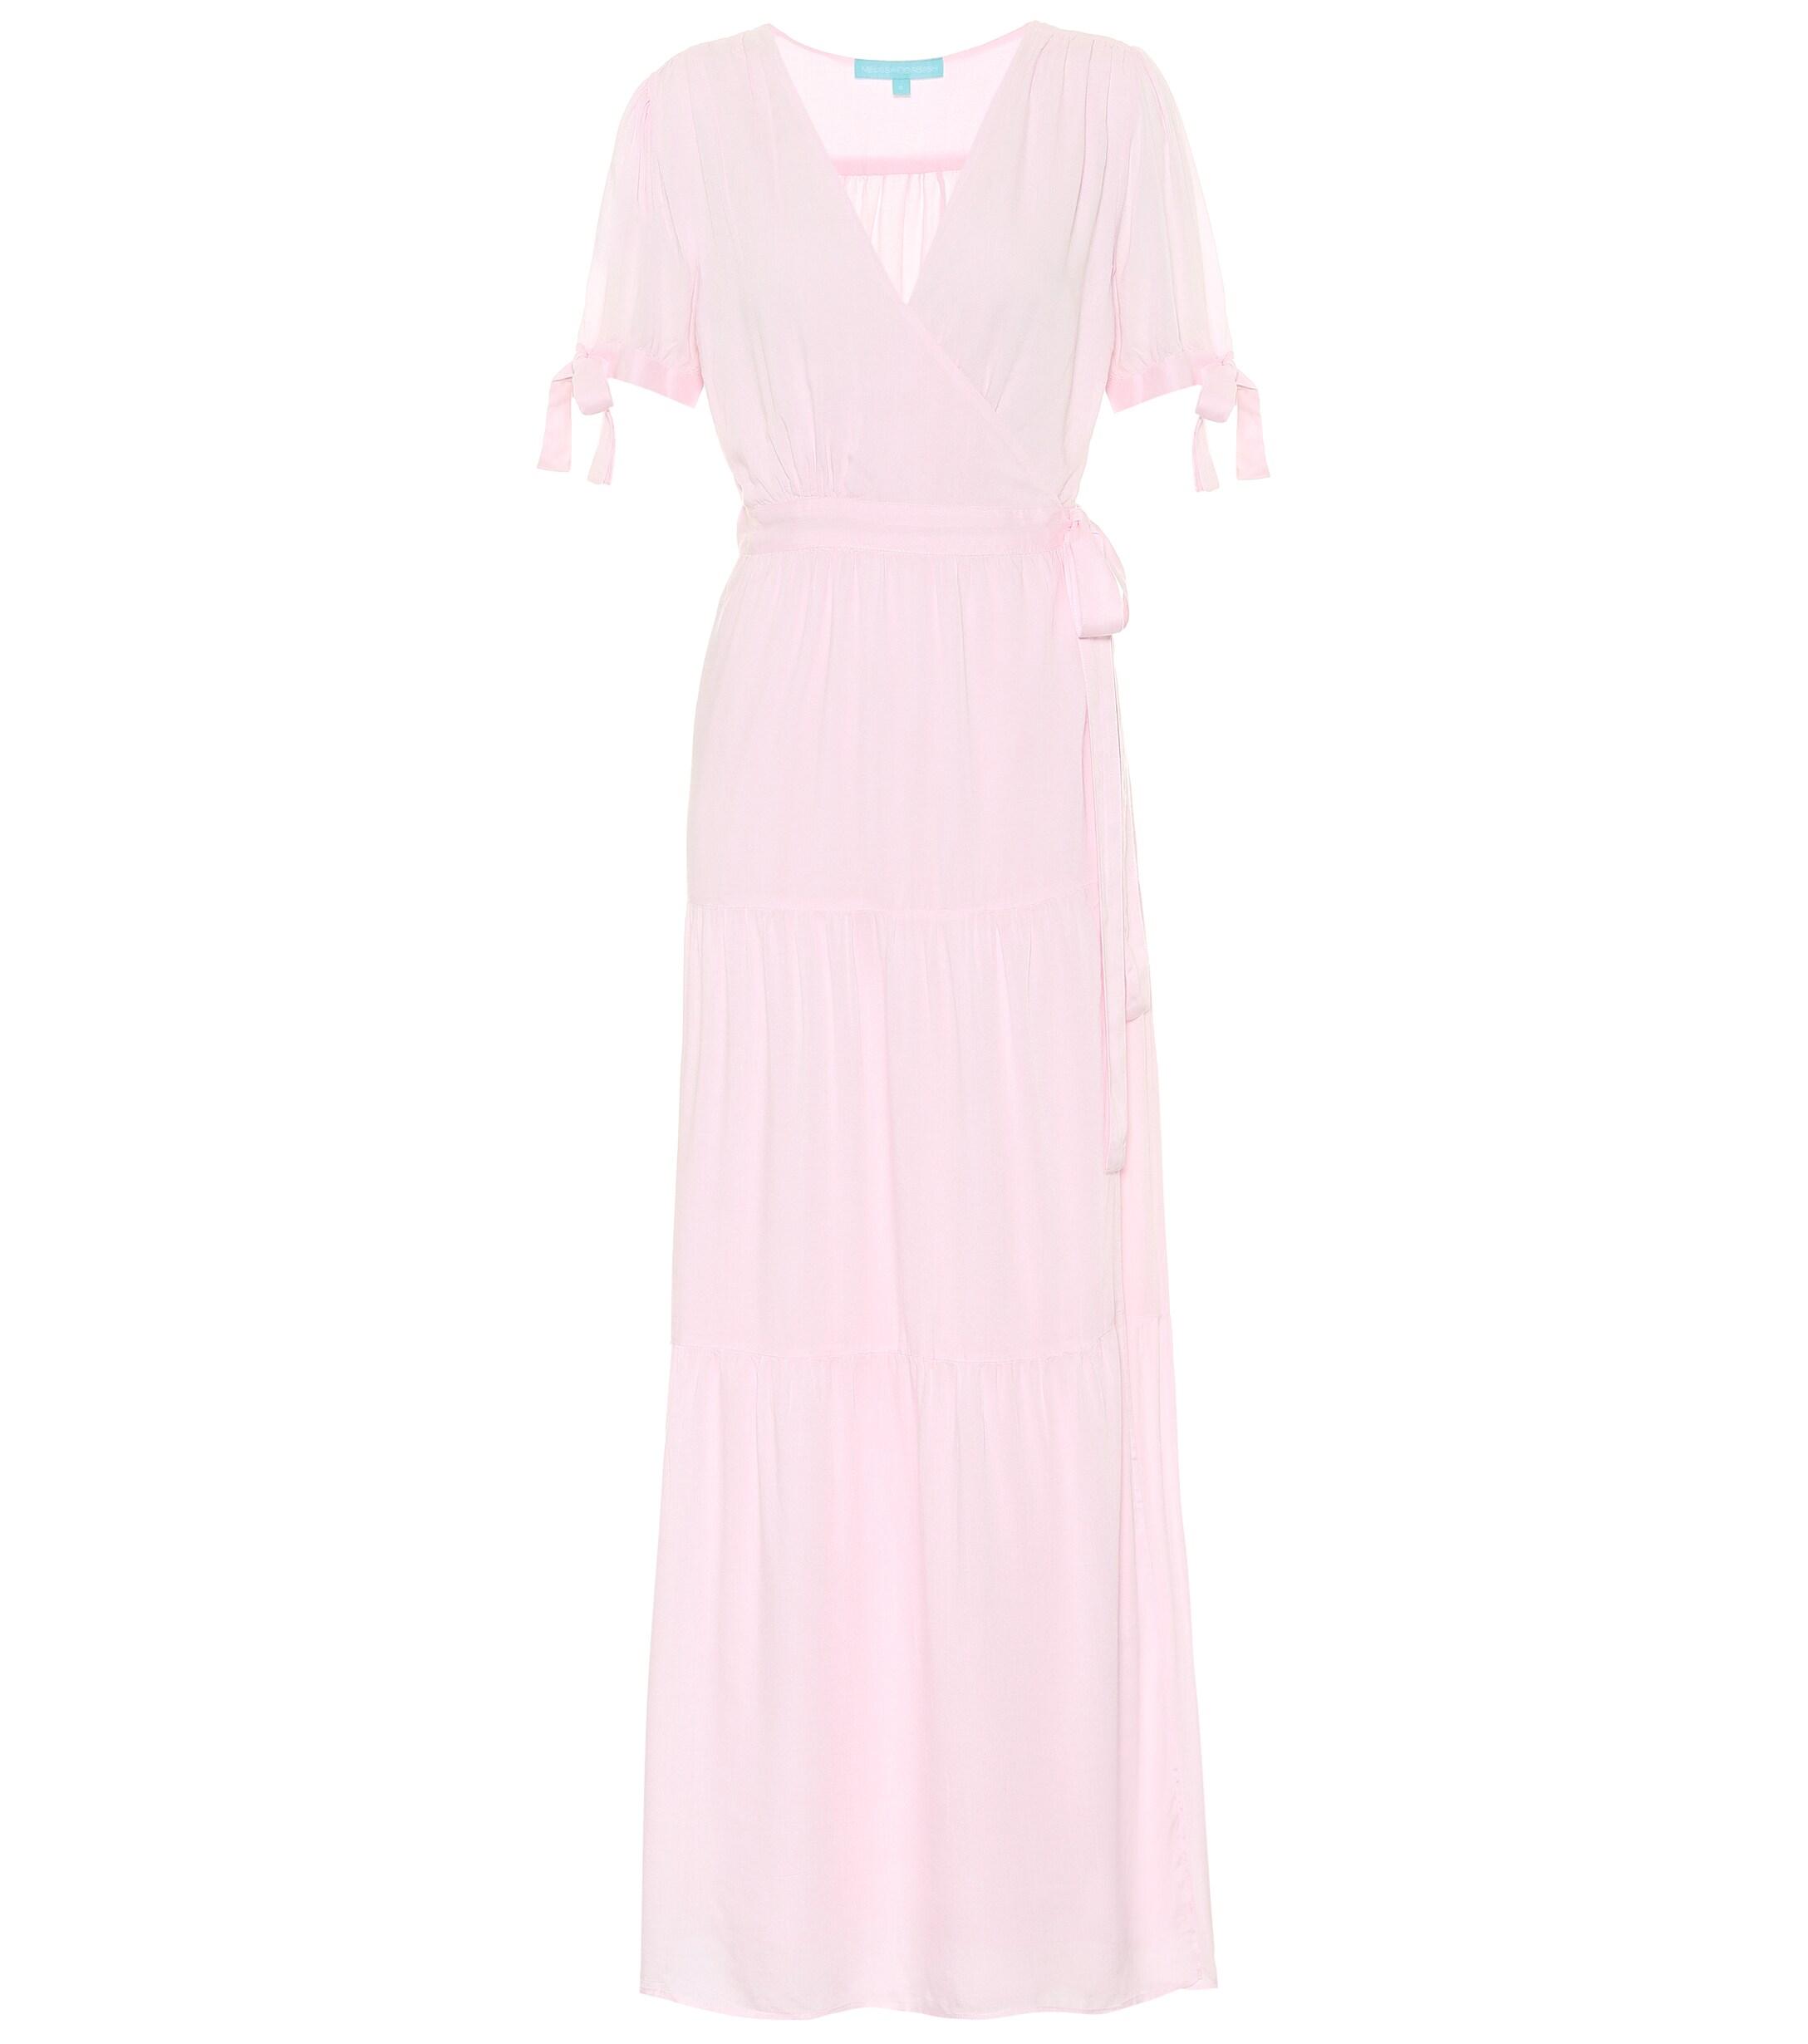 Melissa Odabash Emily Wrap Dress in Pink - Lyst